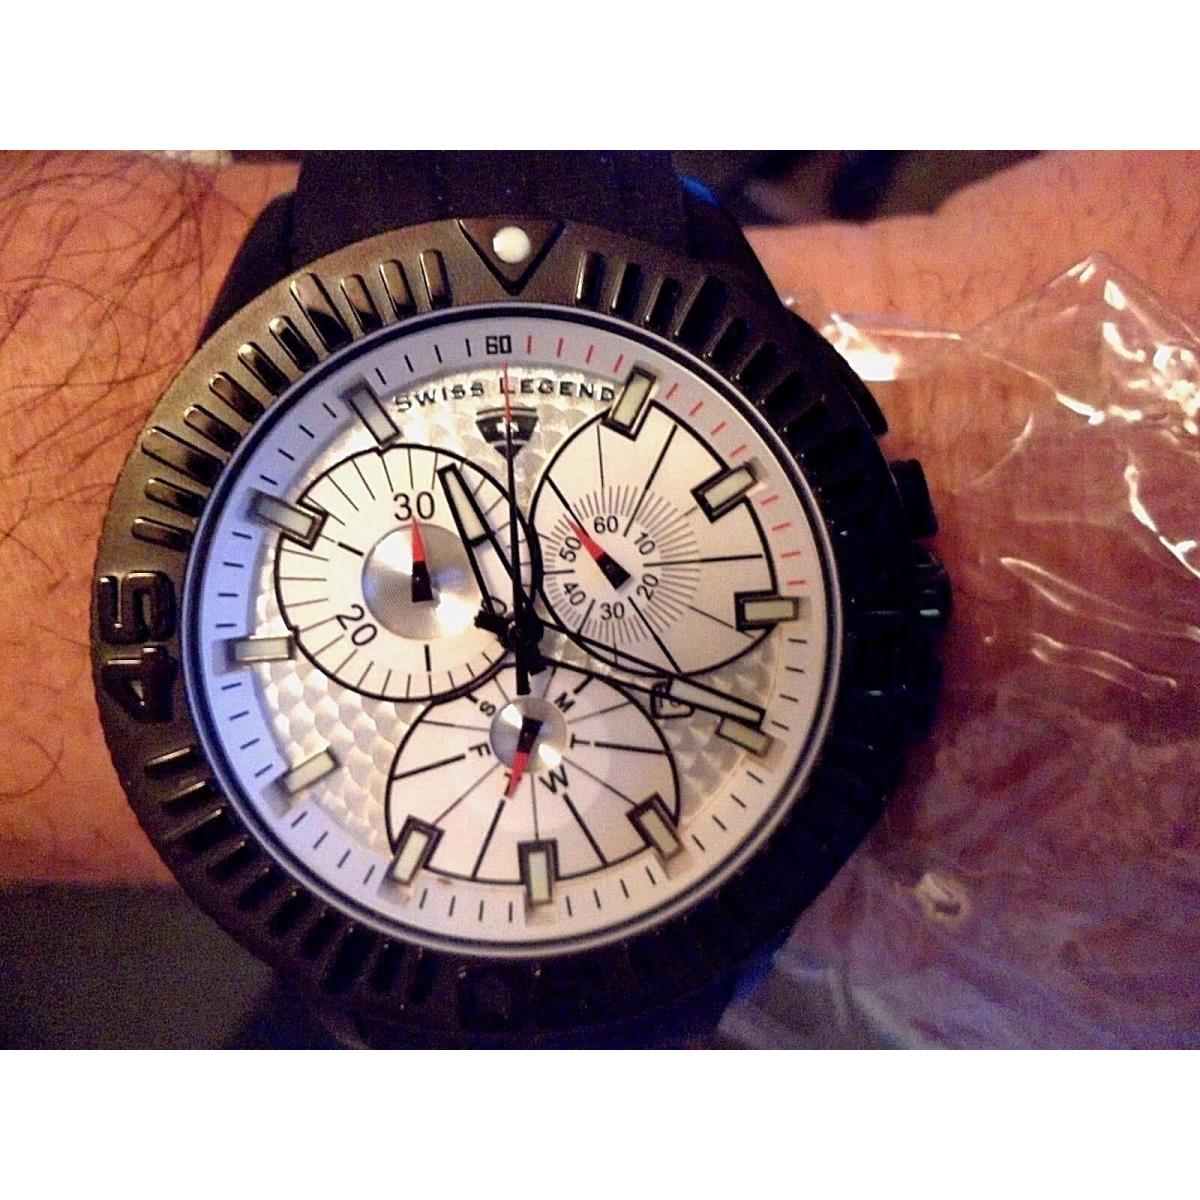 Swiss Legend Mens Evolution Chronograph Silvertextured Dial Watch